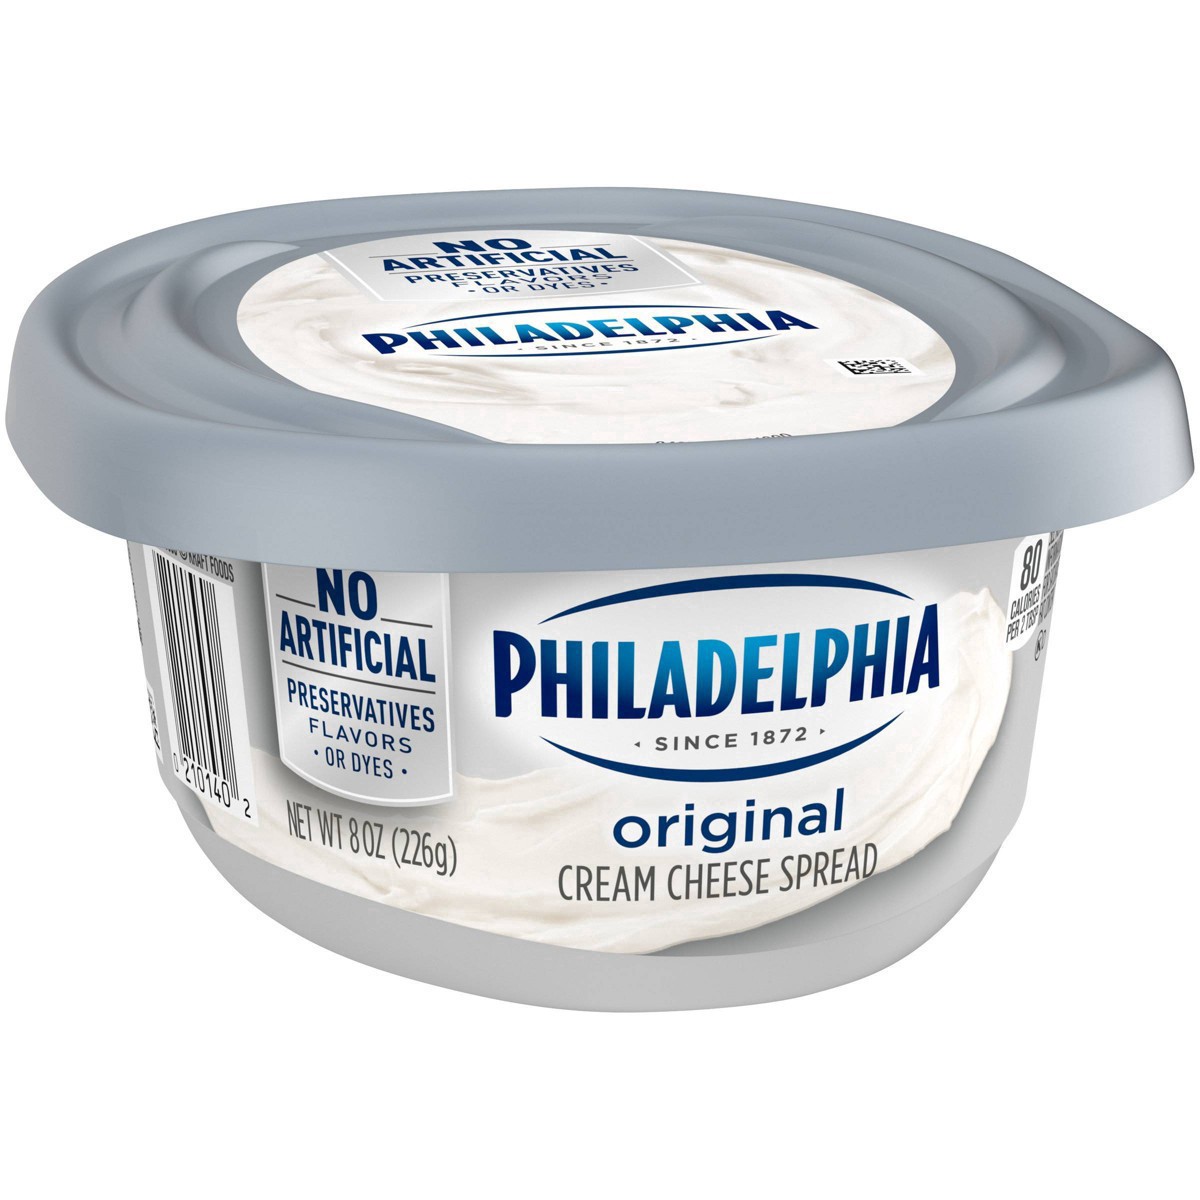 slide 4 of 67, Philadelphia Original Cream Cheese Spread, 8 oz